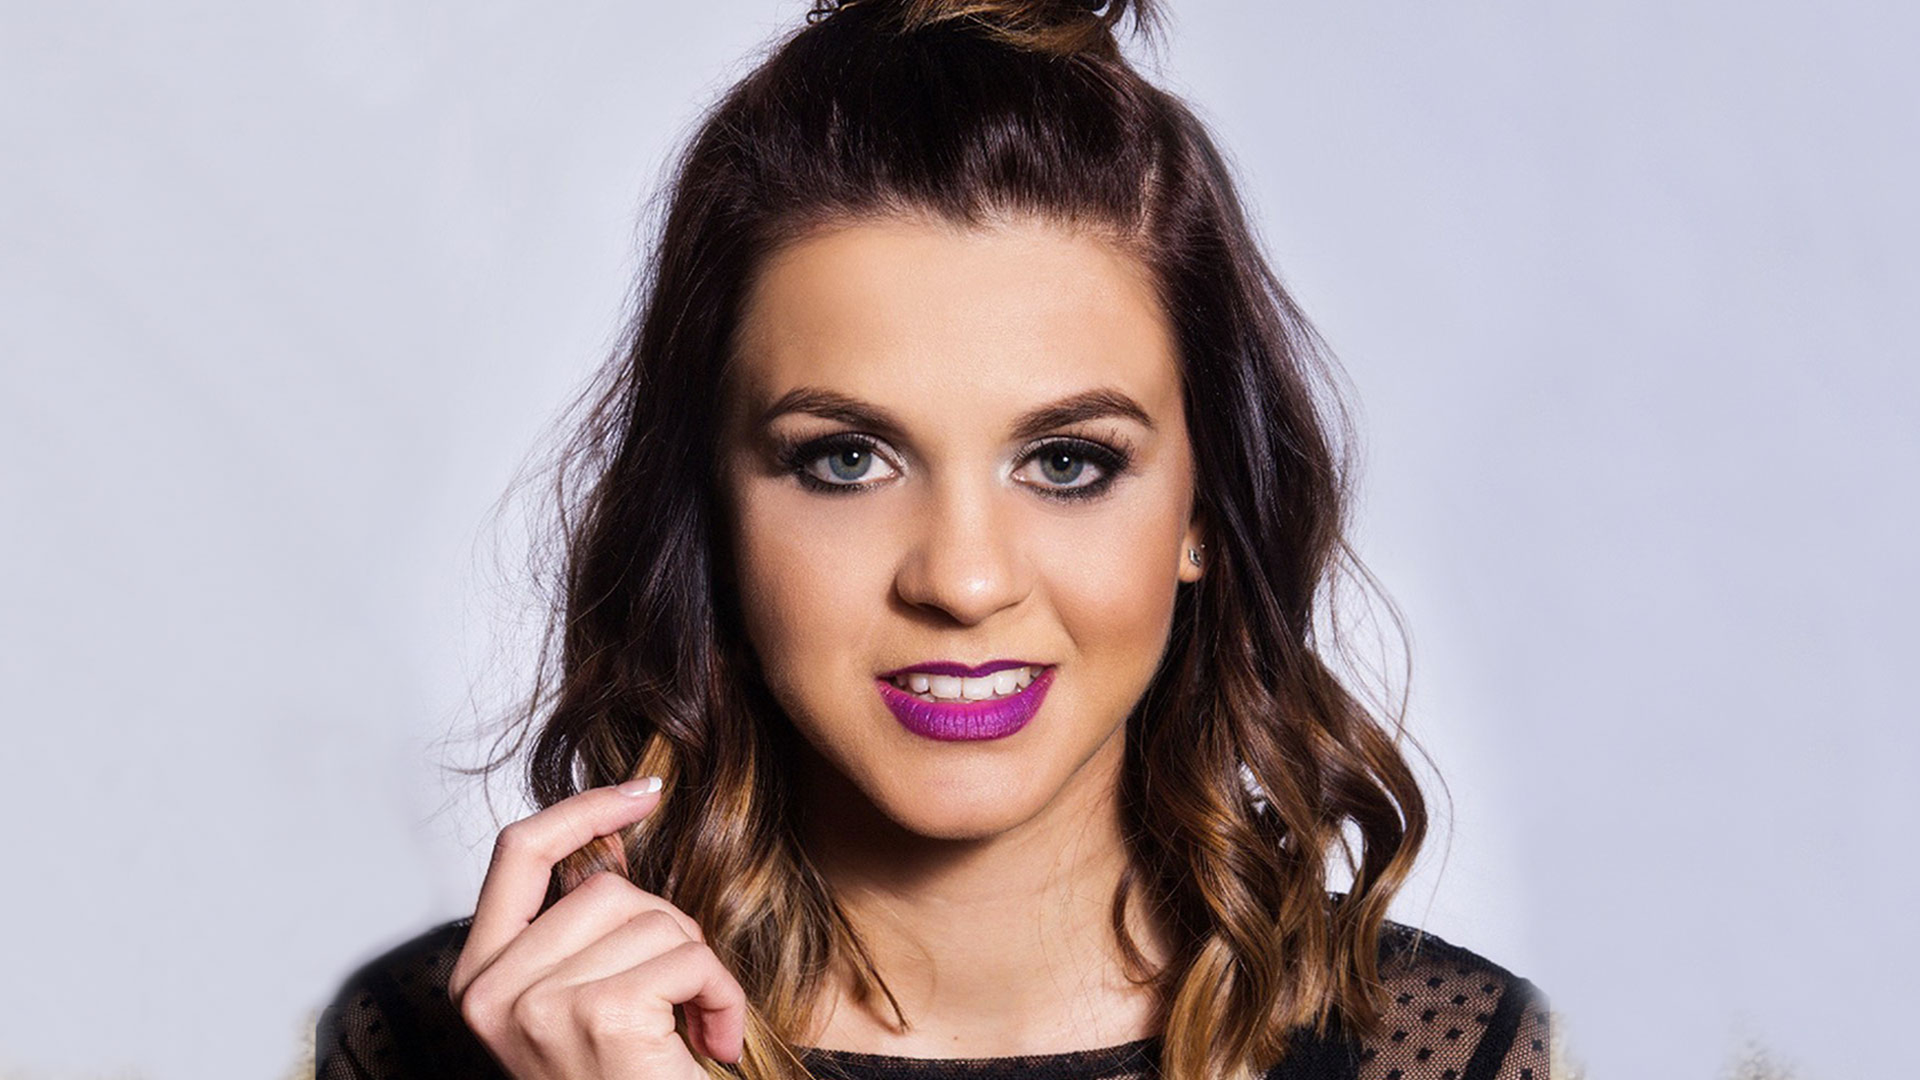 Headshot of Lauren Layfield wearing purple lipstick against a light grey background